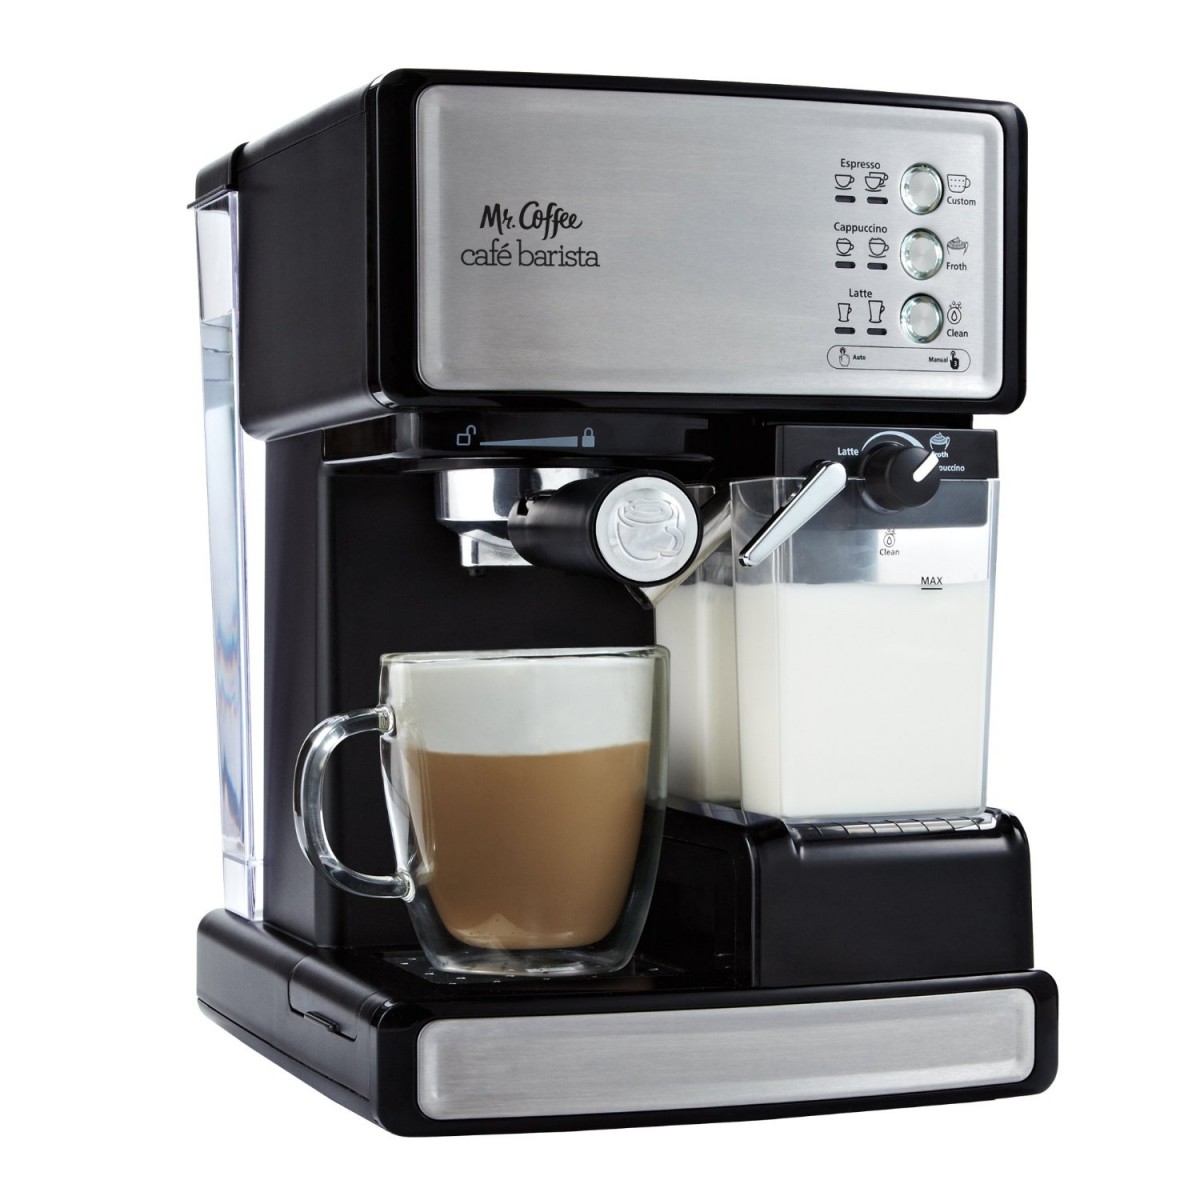 mr. coffee cafe barista espresso machine review